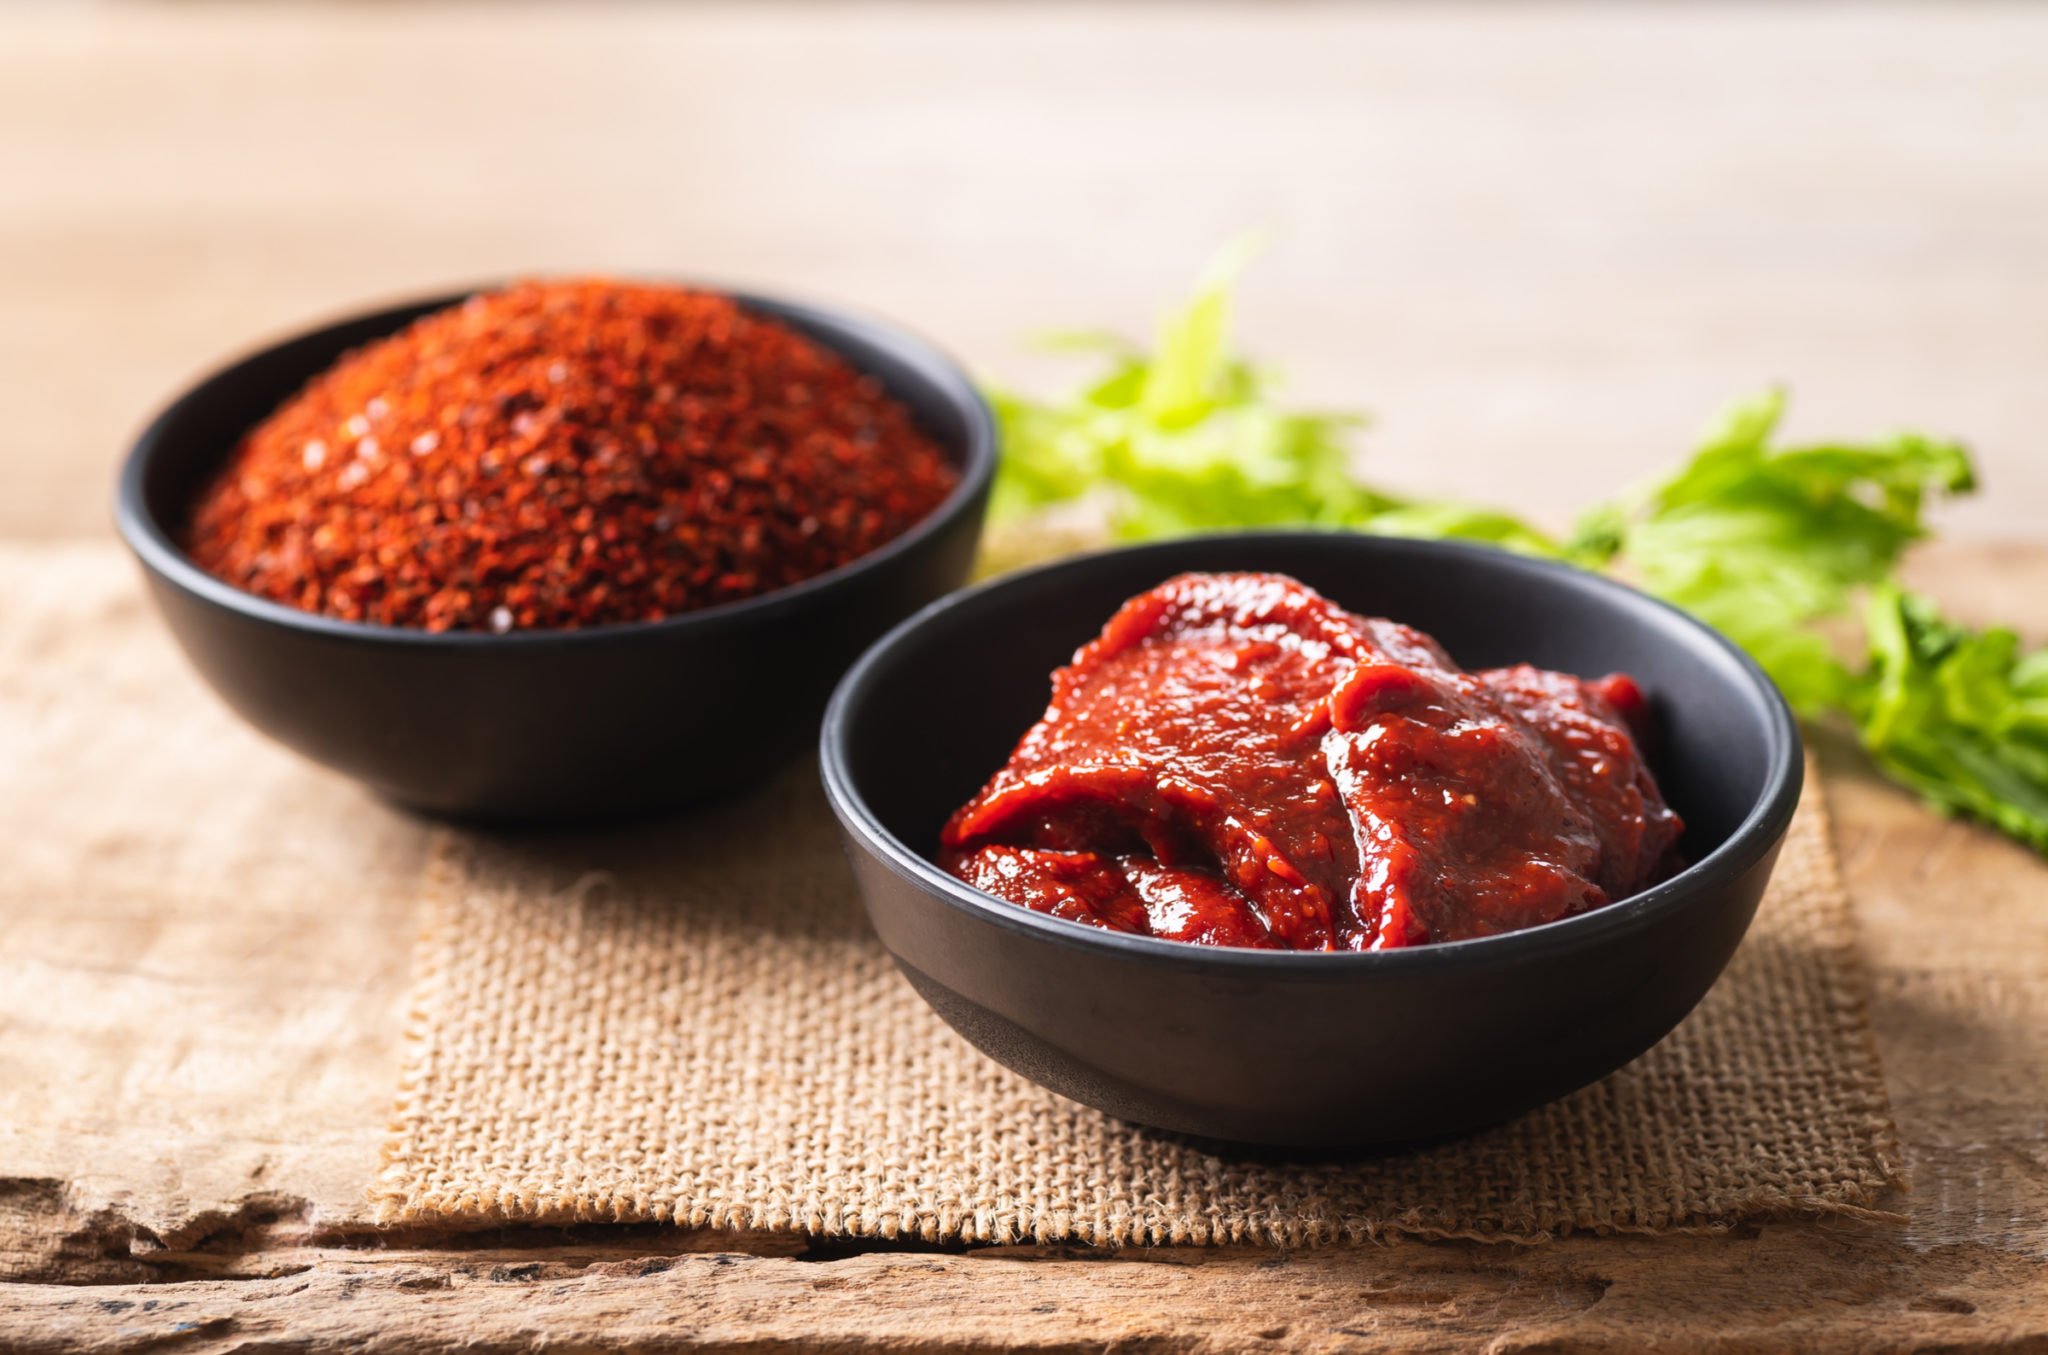 gochugaru chili powder versus gochujang chili paste